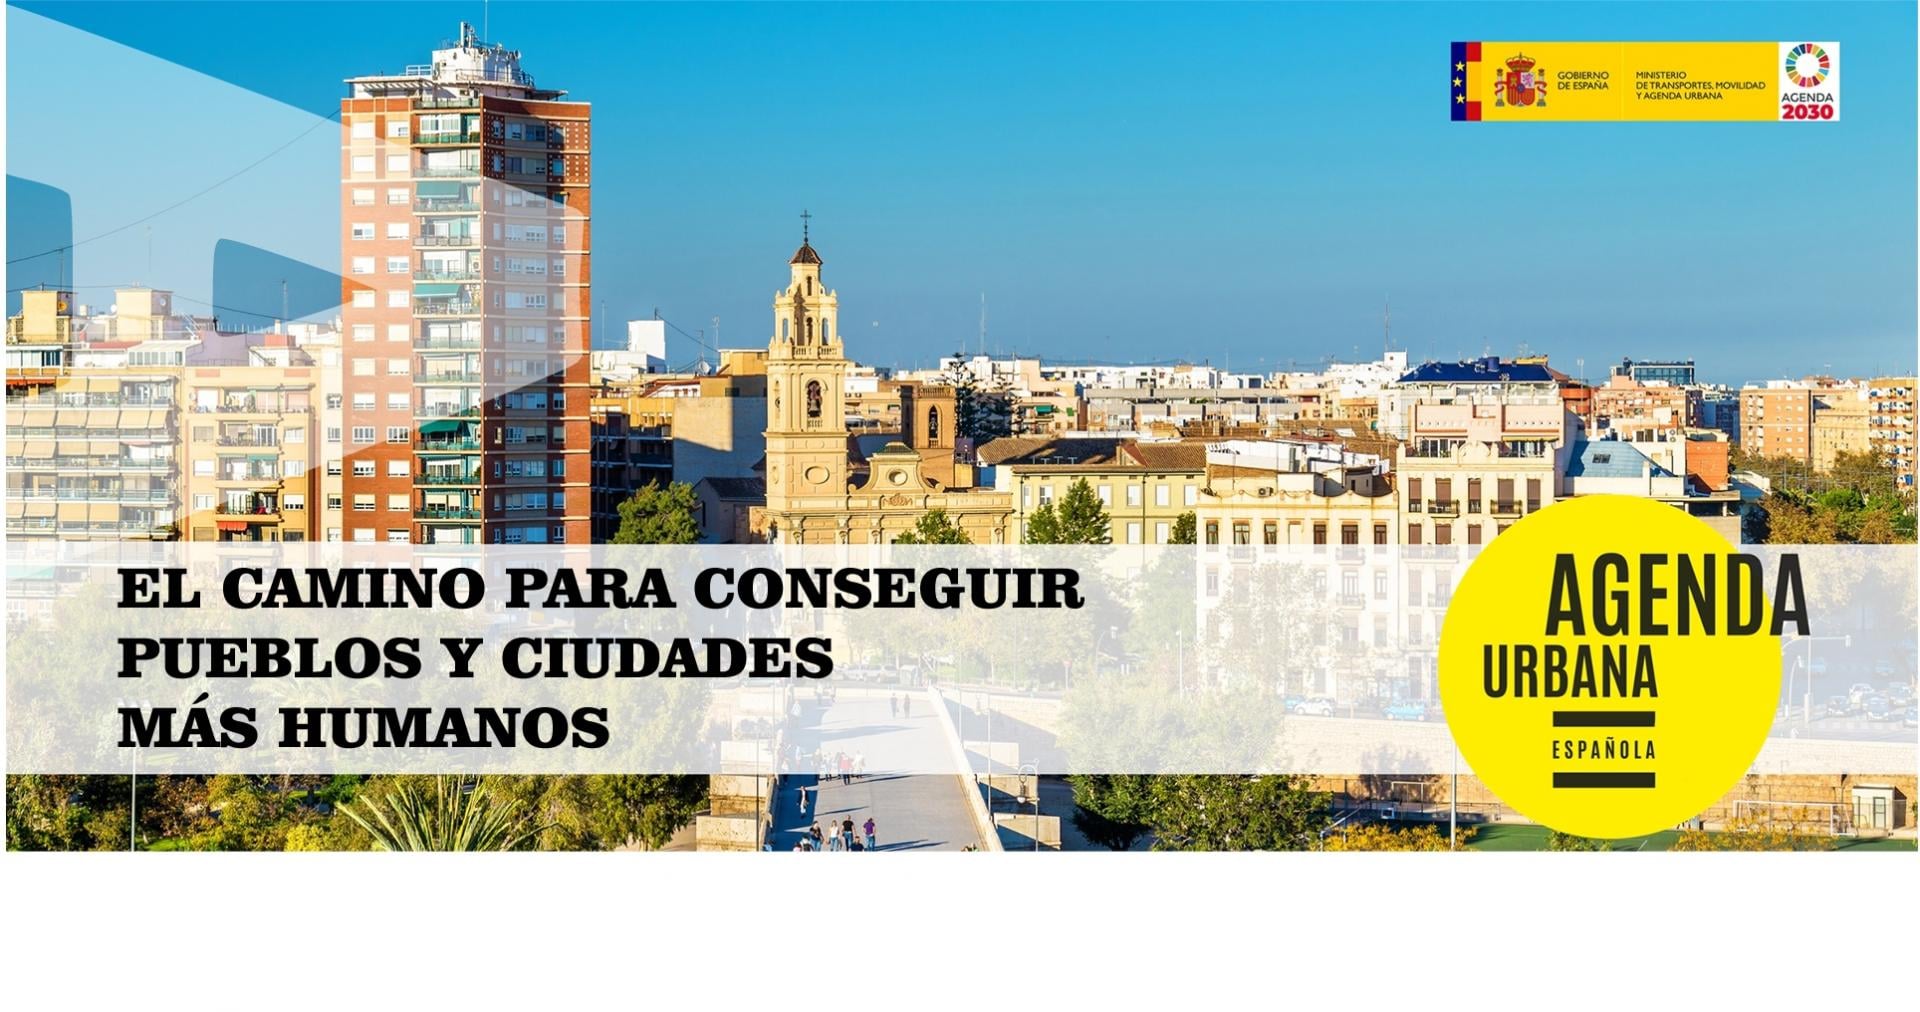 Tarifa seleccionada como proyecto piloto de la Agenda Urbana Española